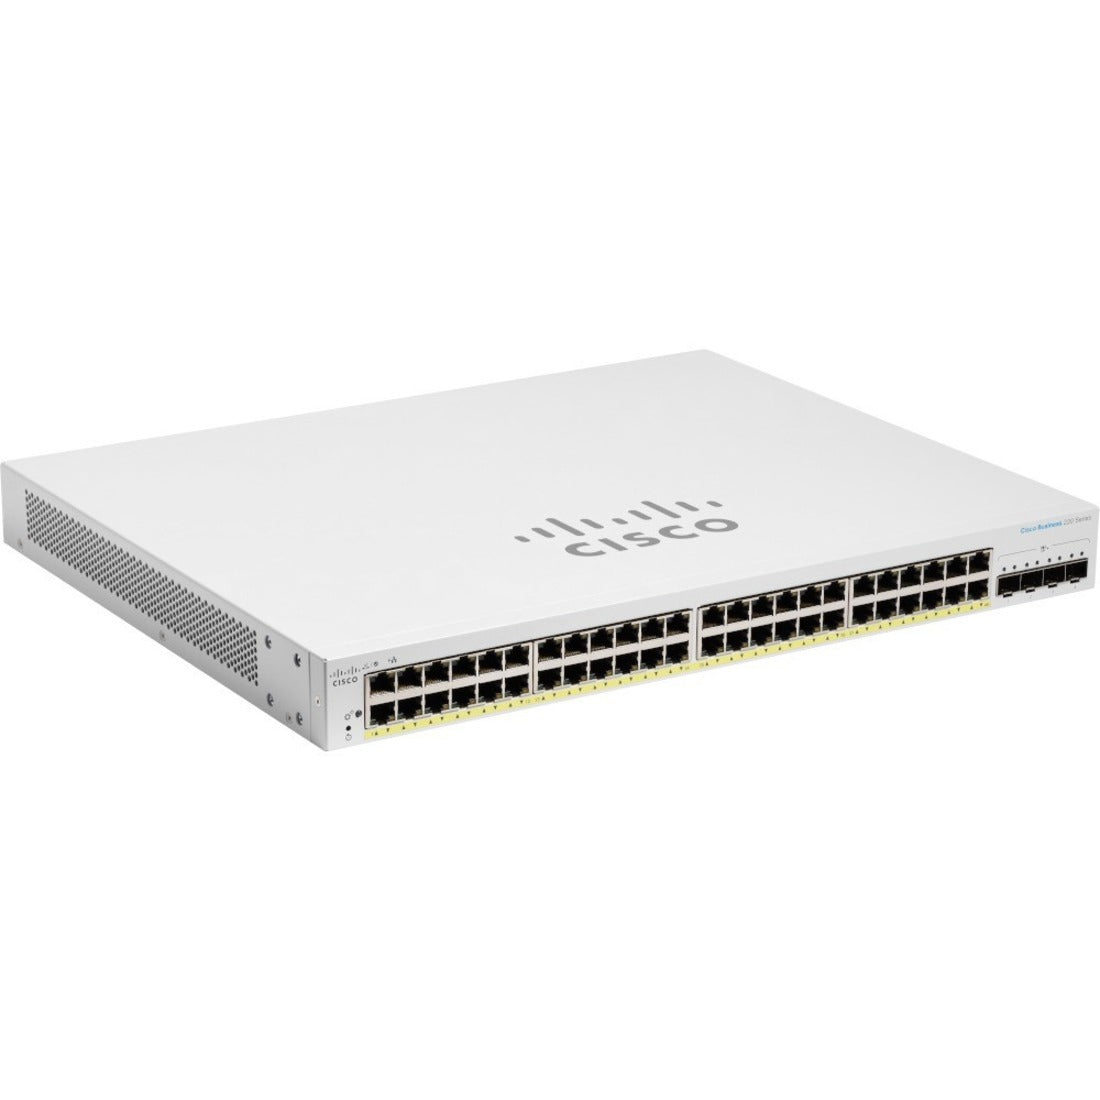 Cisco Business CBS220-48T-4X Ethernet Switch (CBS220-48T-4X-NA)